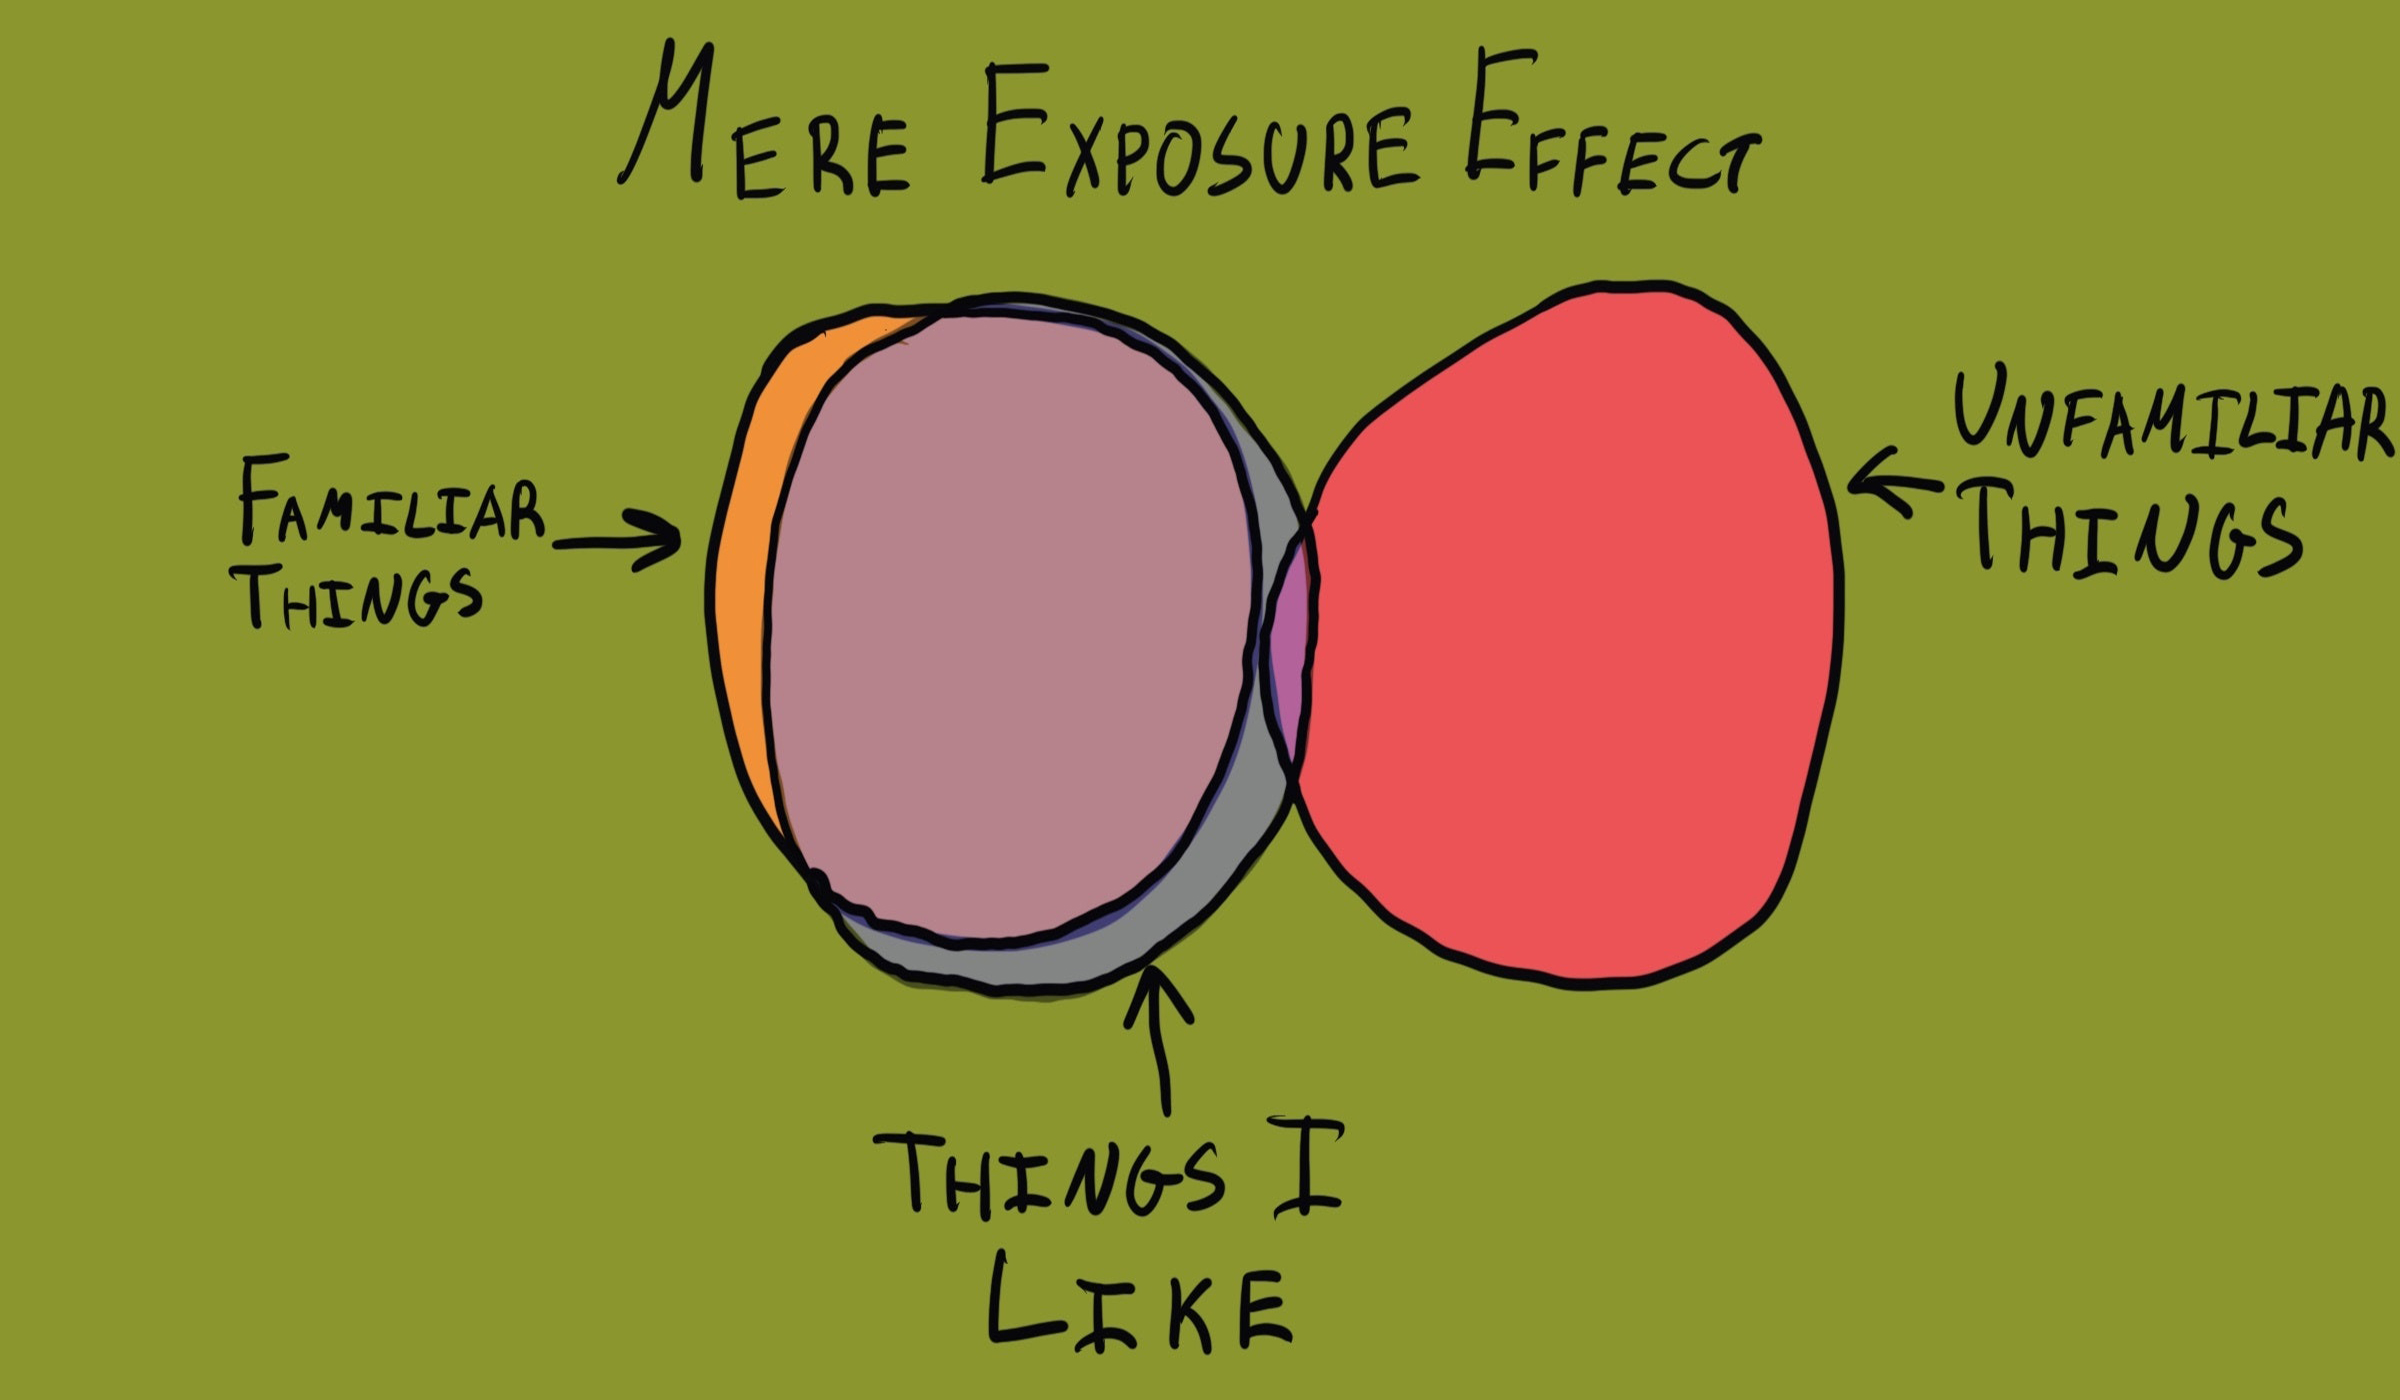 Mere Exposure Effect illustrations